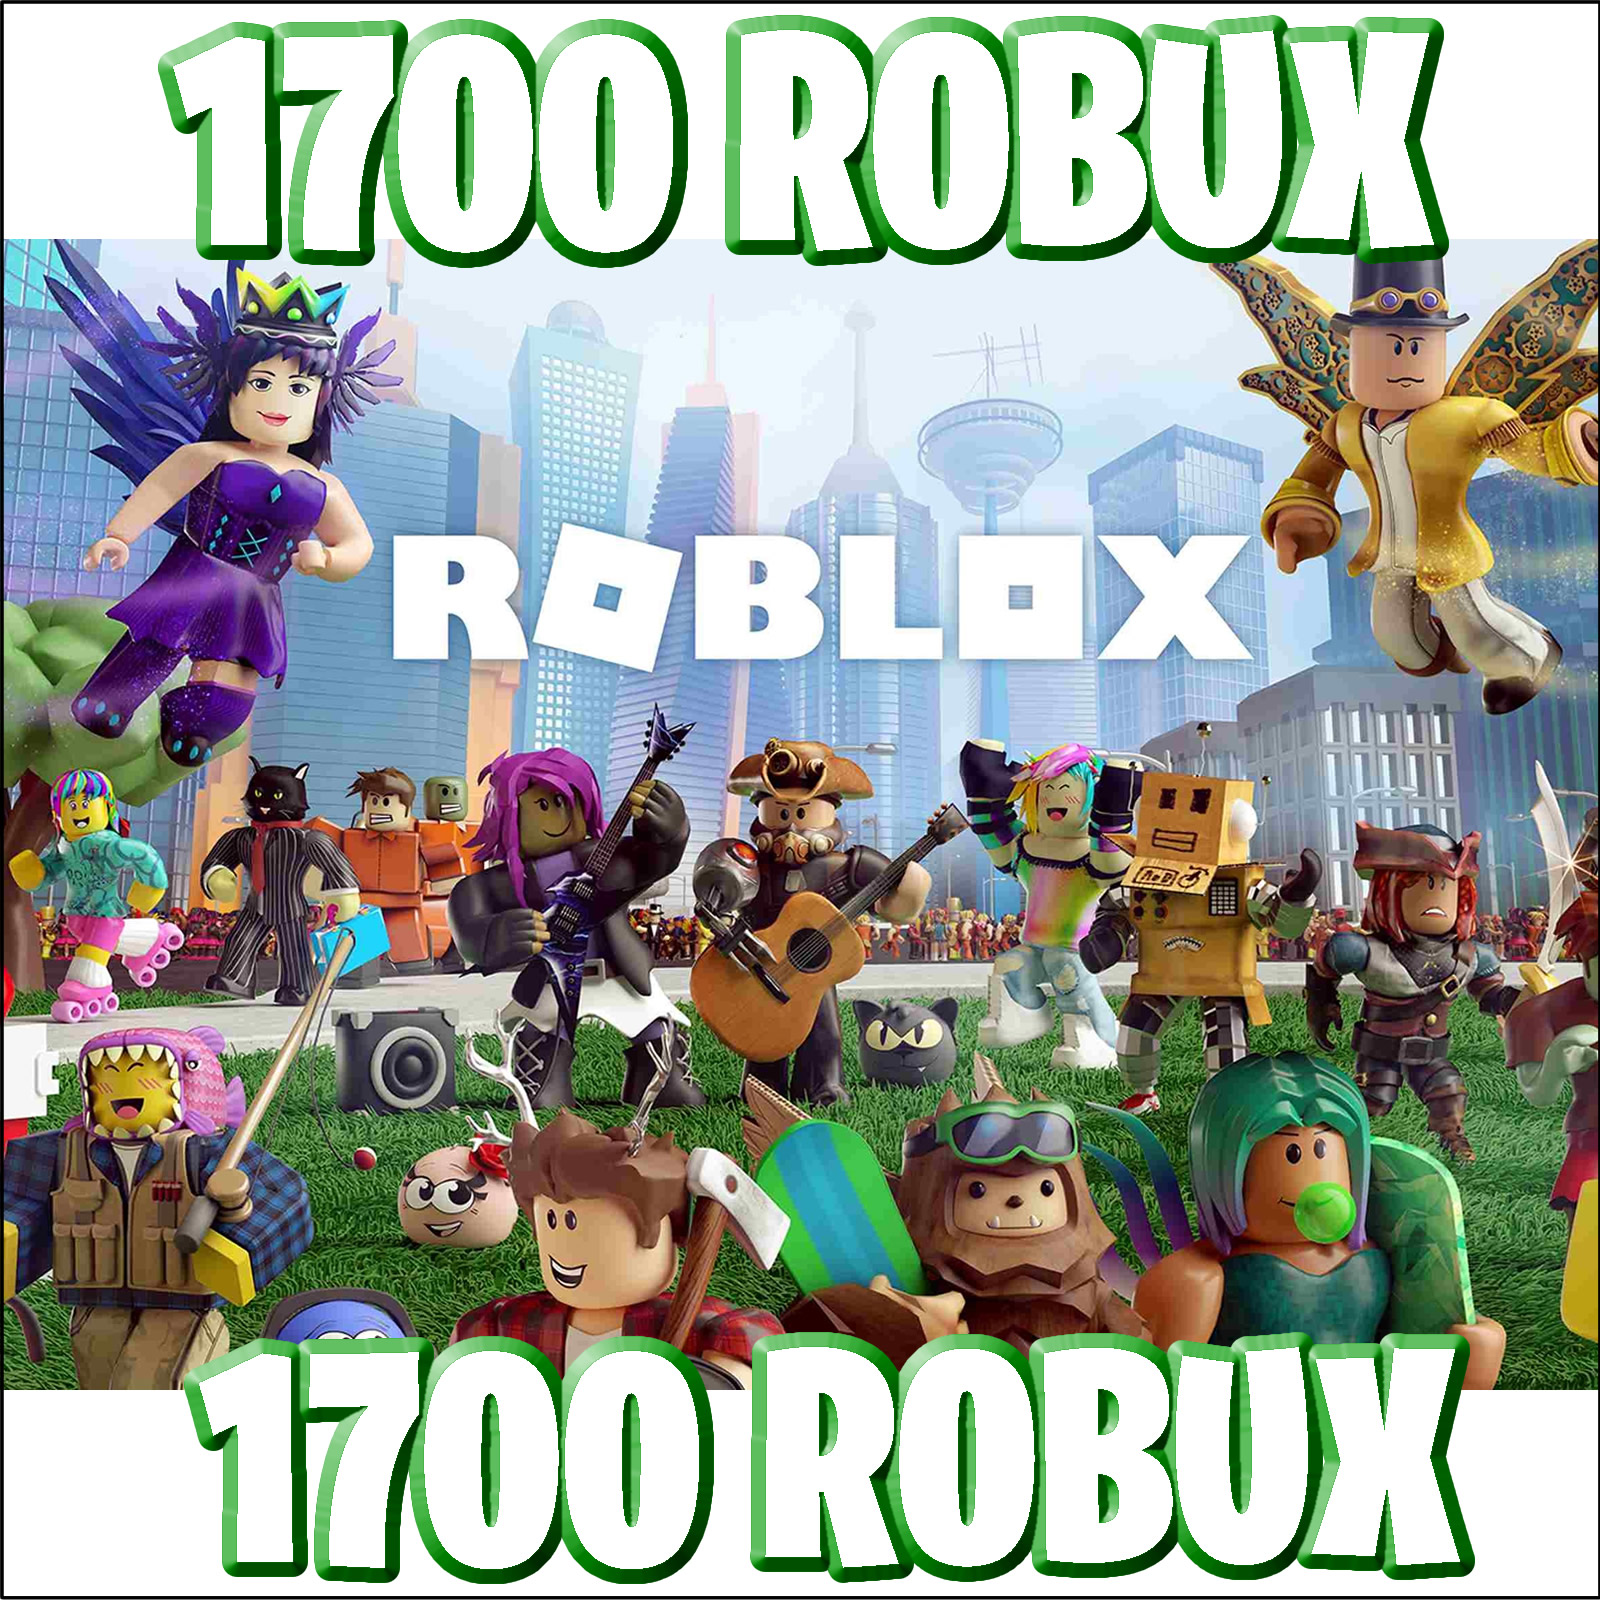 1700 Robux - 20 roblox card tomwhite2010 com